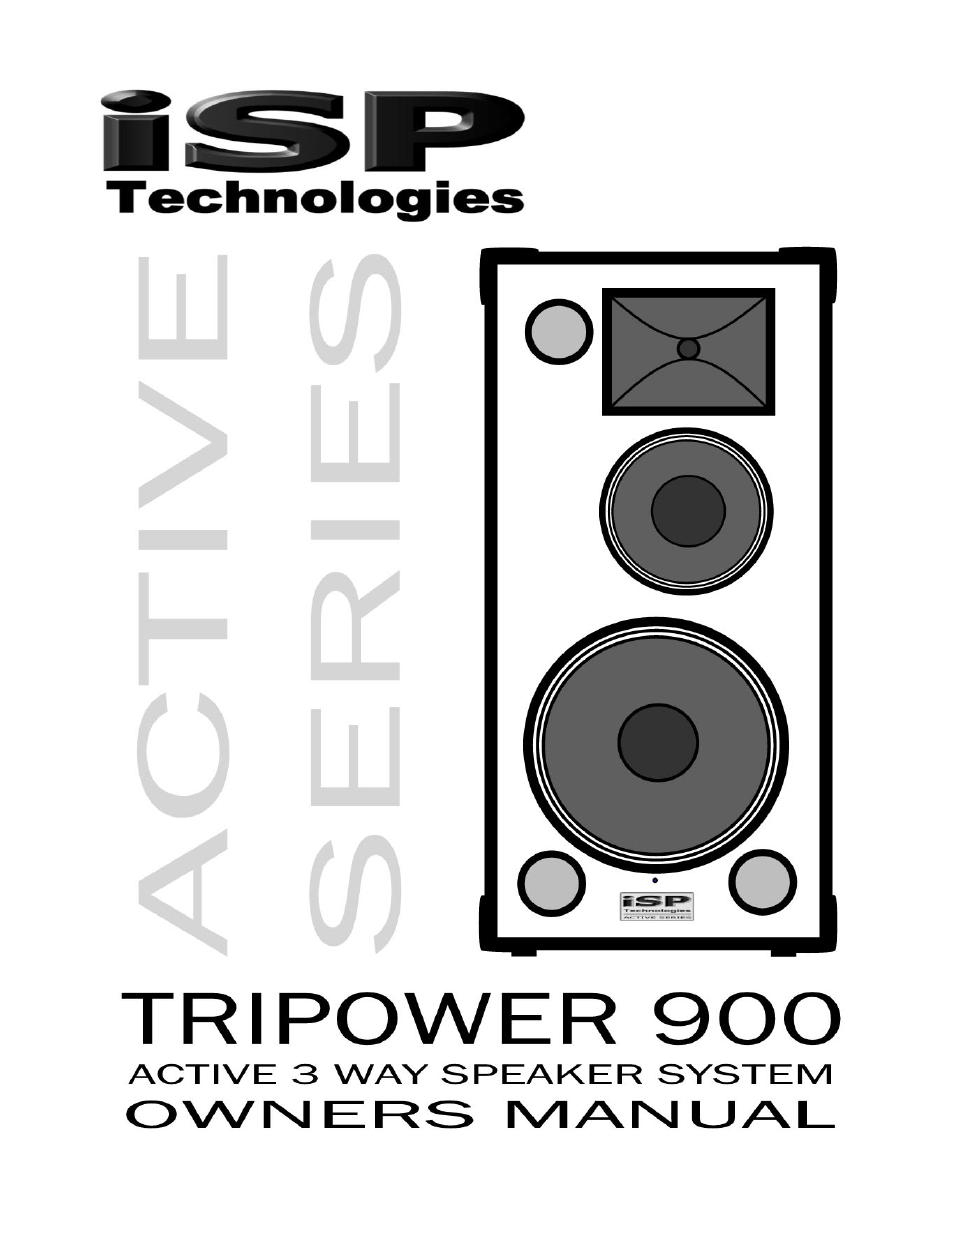 Tripower 900